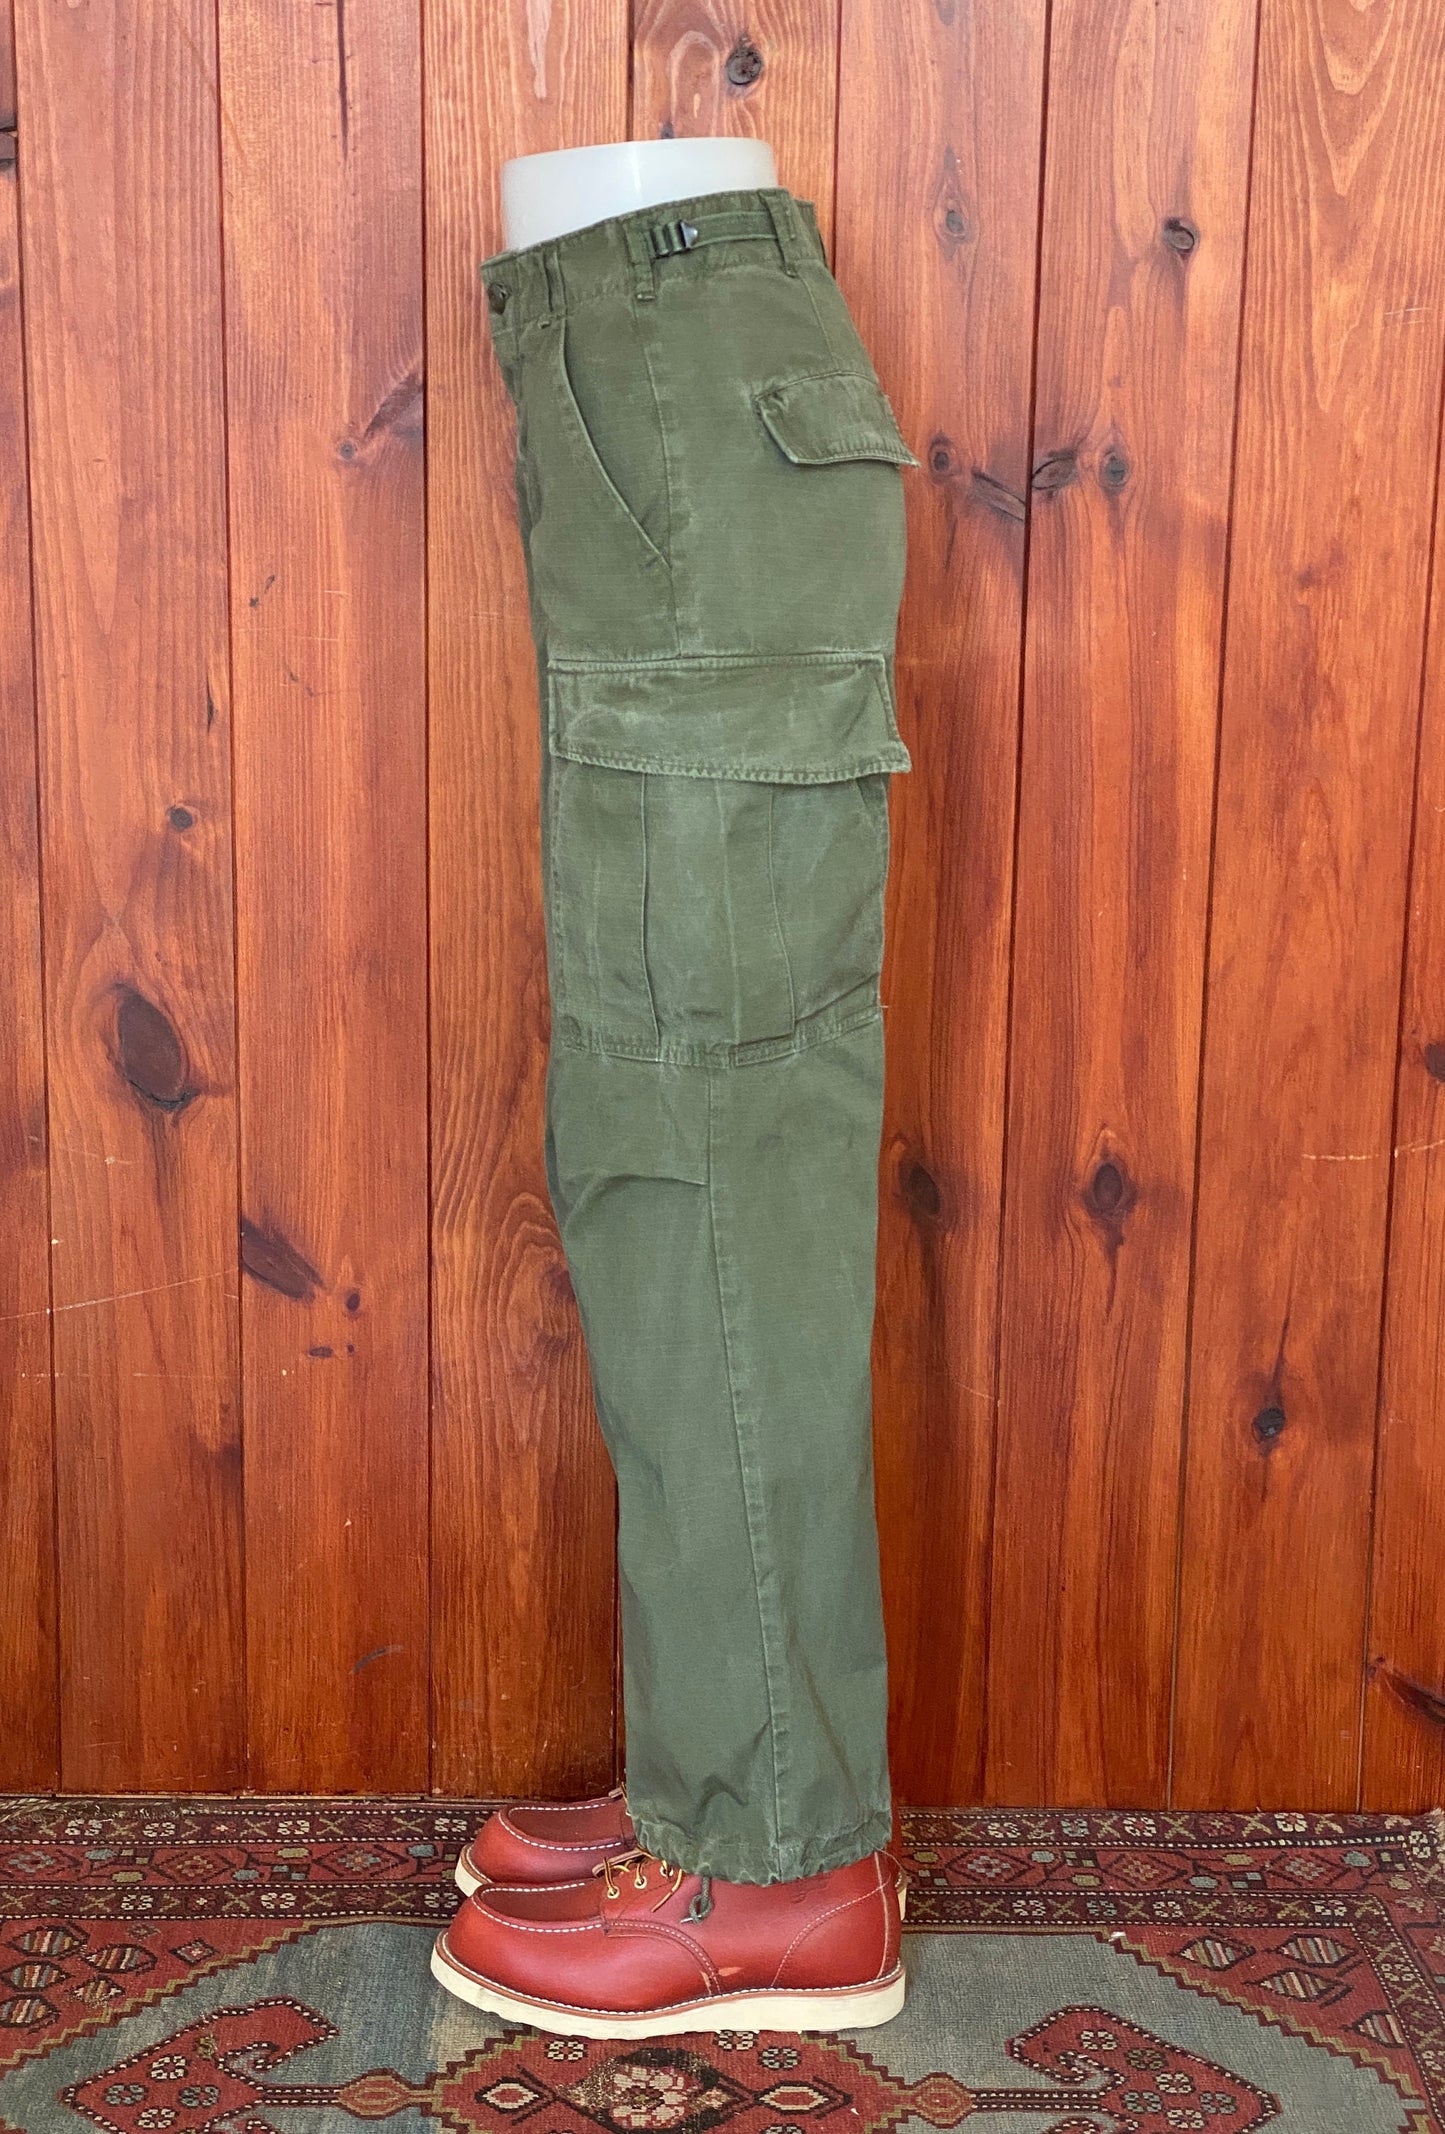 XS Reg. 1967 Authentic US Army Vietnam war era OG-107 jungle pants